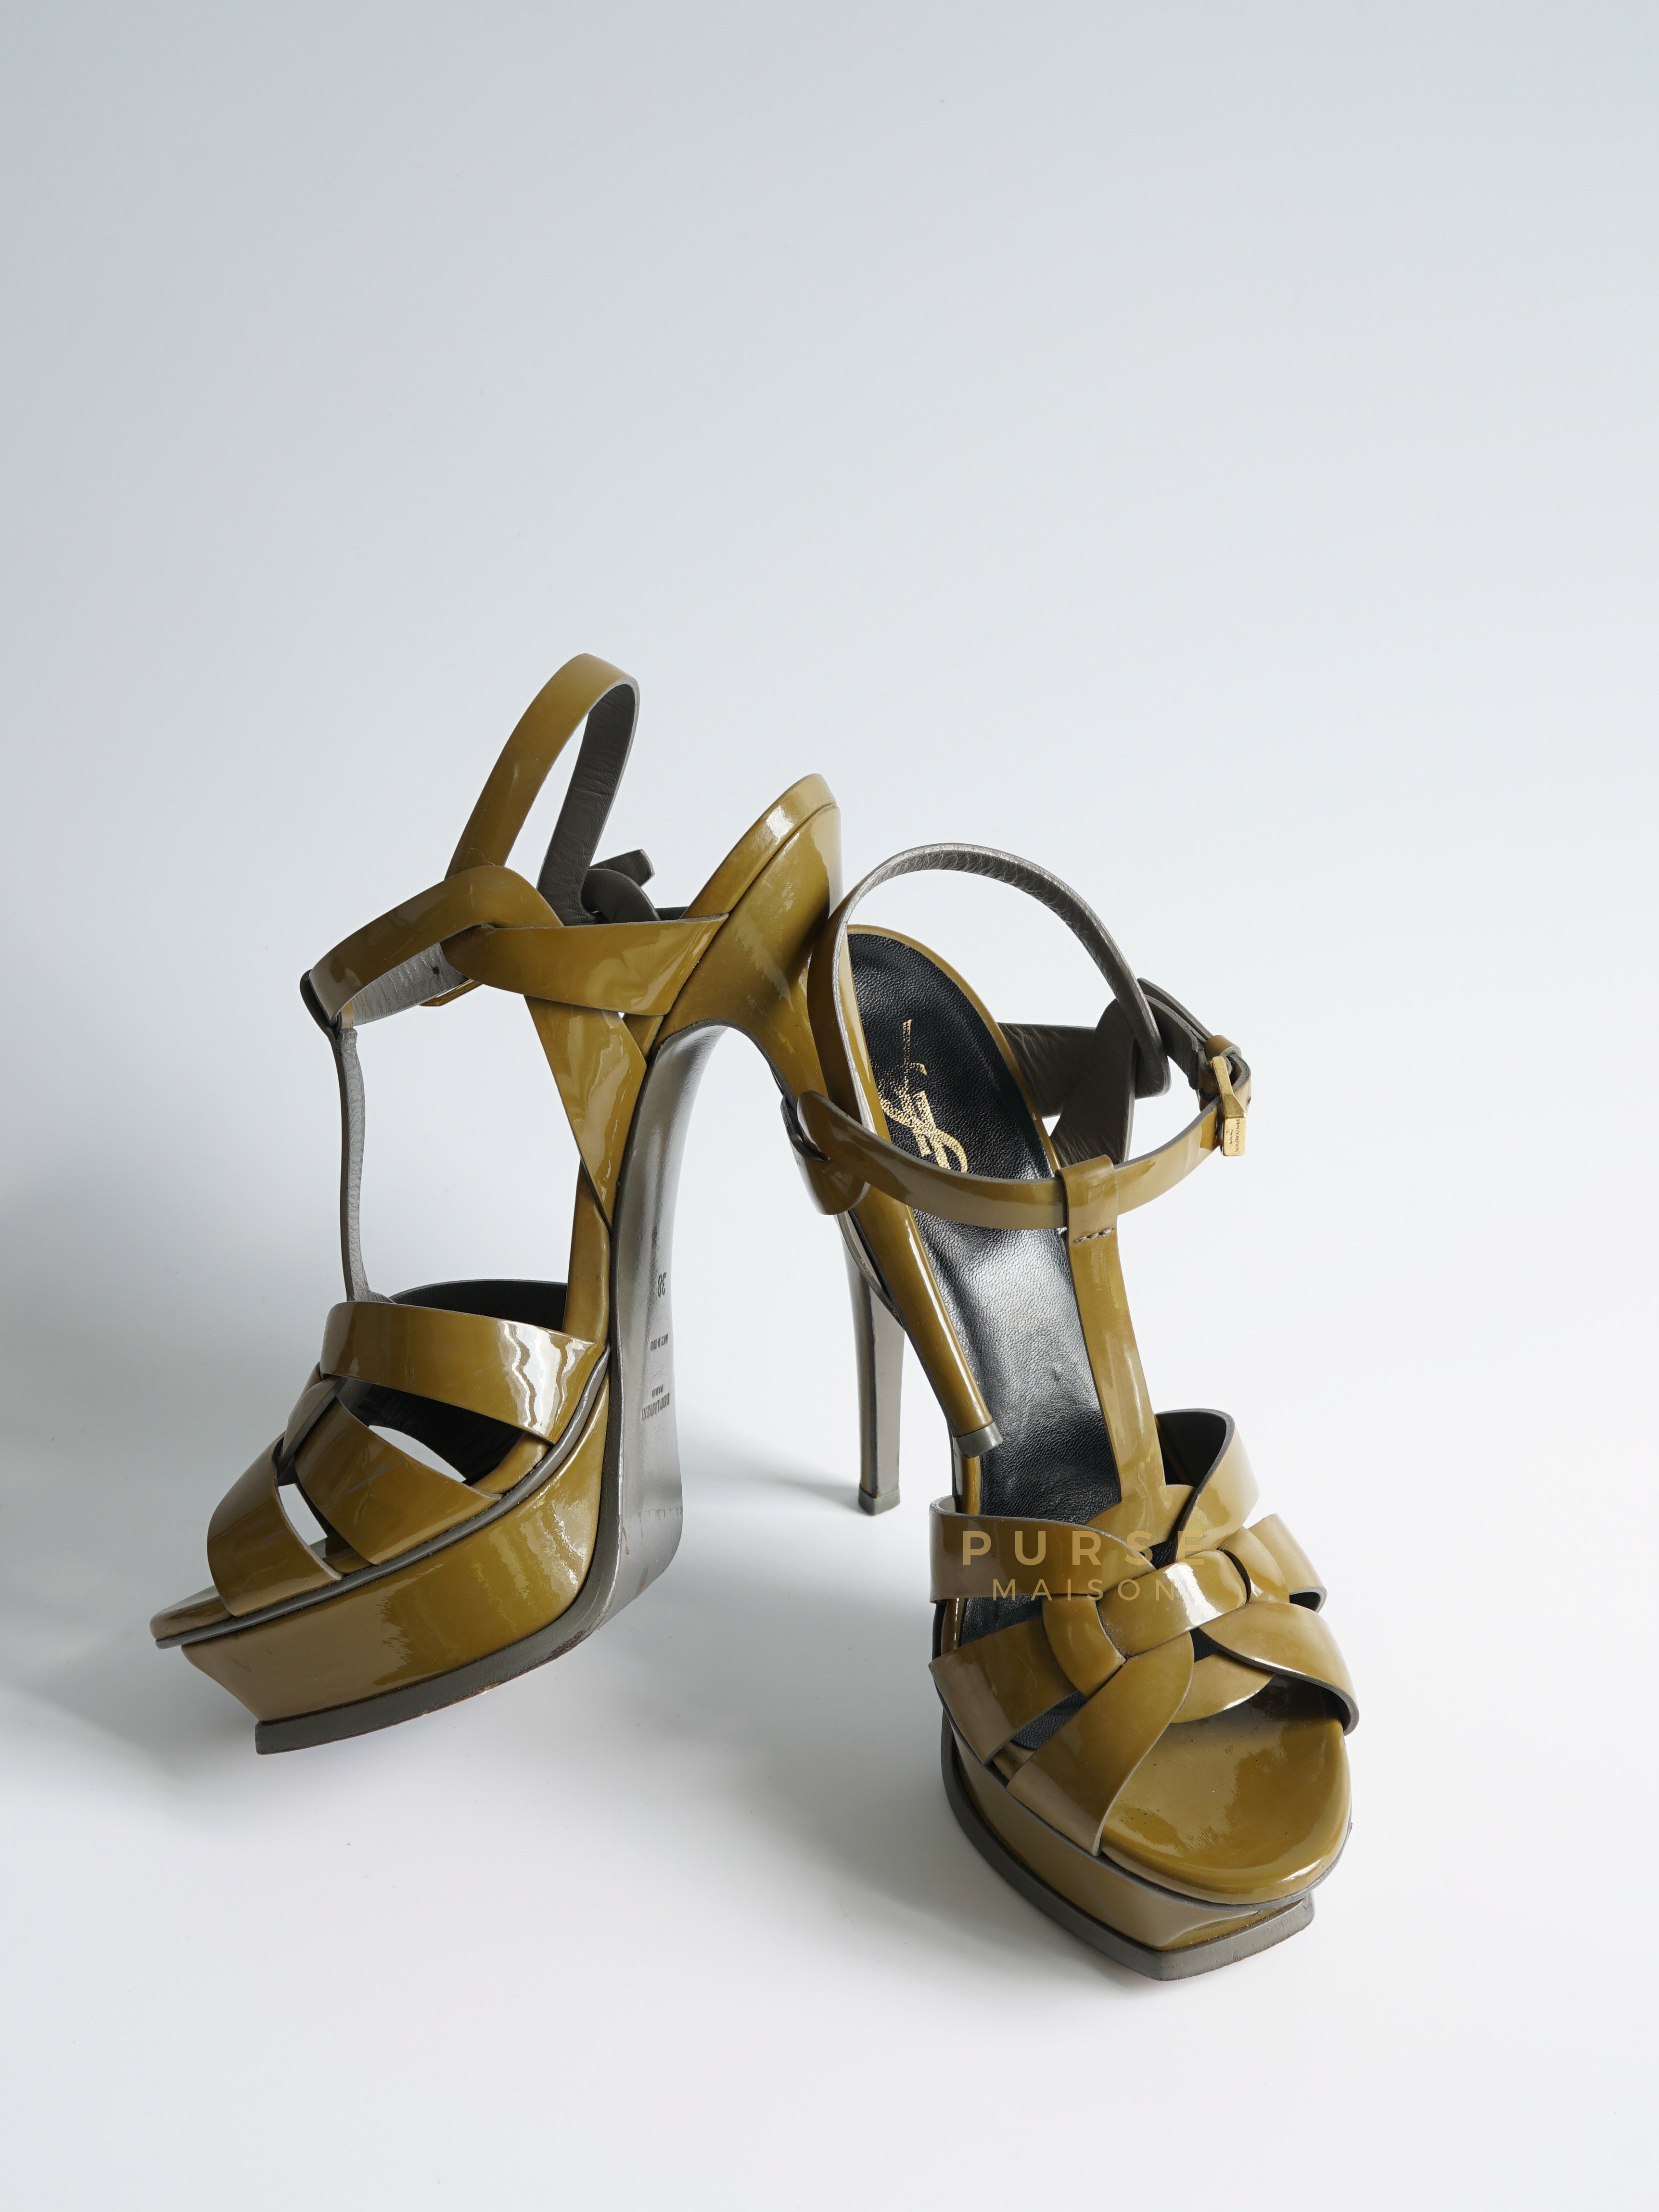 Tribute Army Green Patent Leather High Heels Sandals Size 38EU (25cm) | Purse Maison Luxury Bags Shop